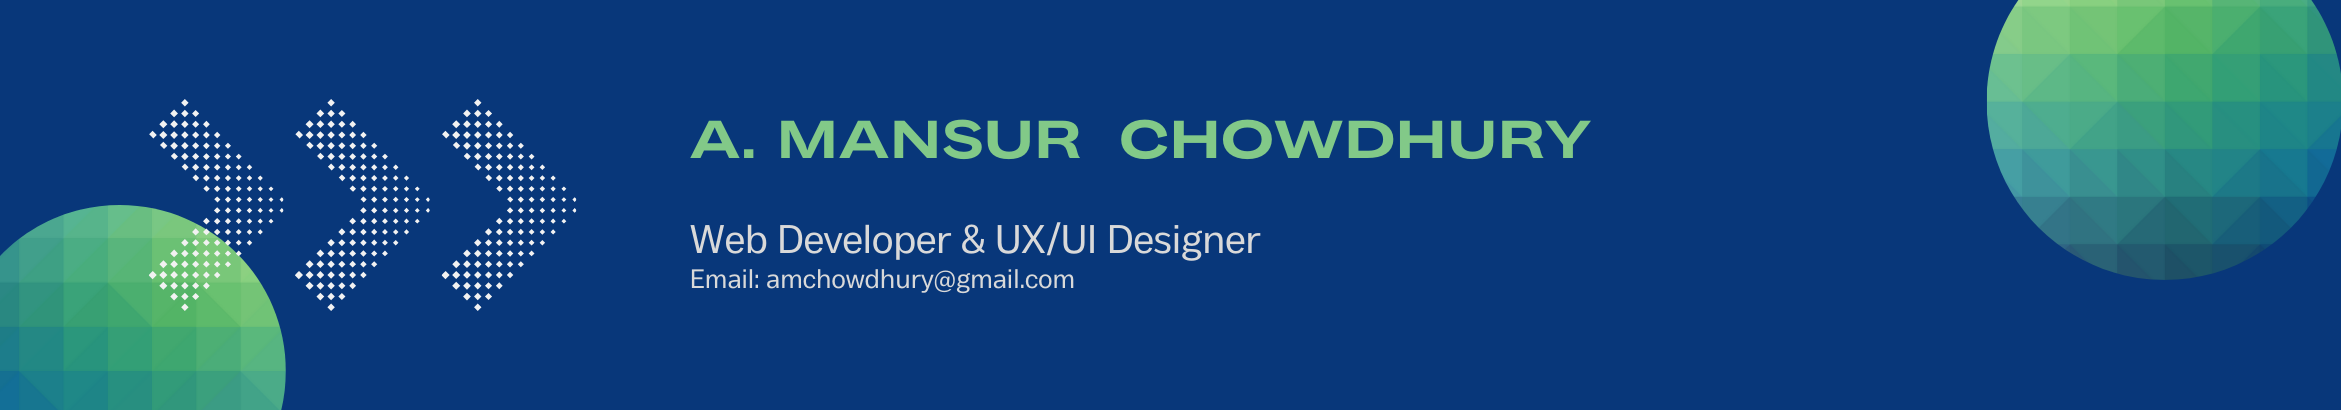 dhrubo chowdhury's profile banner